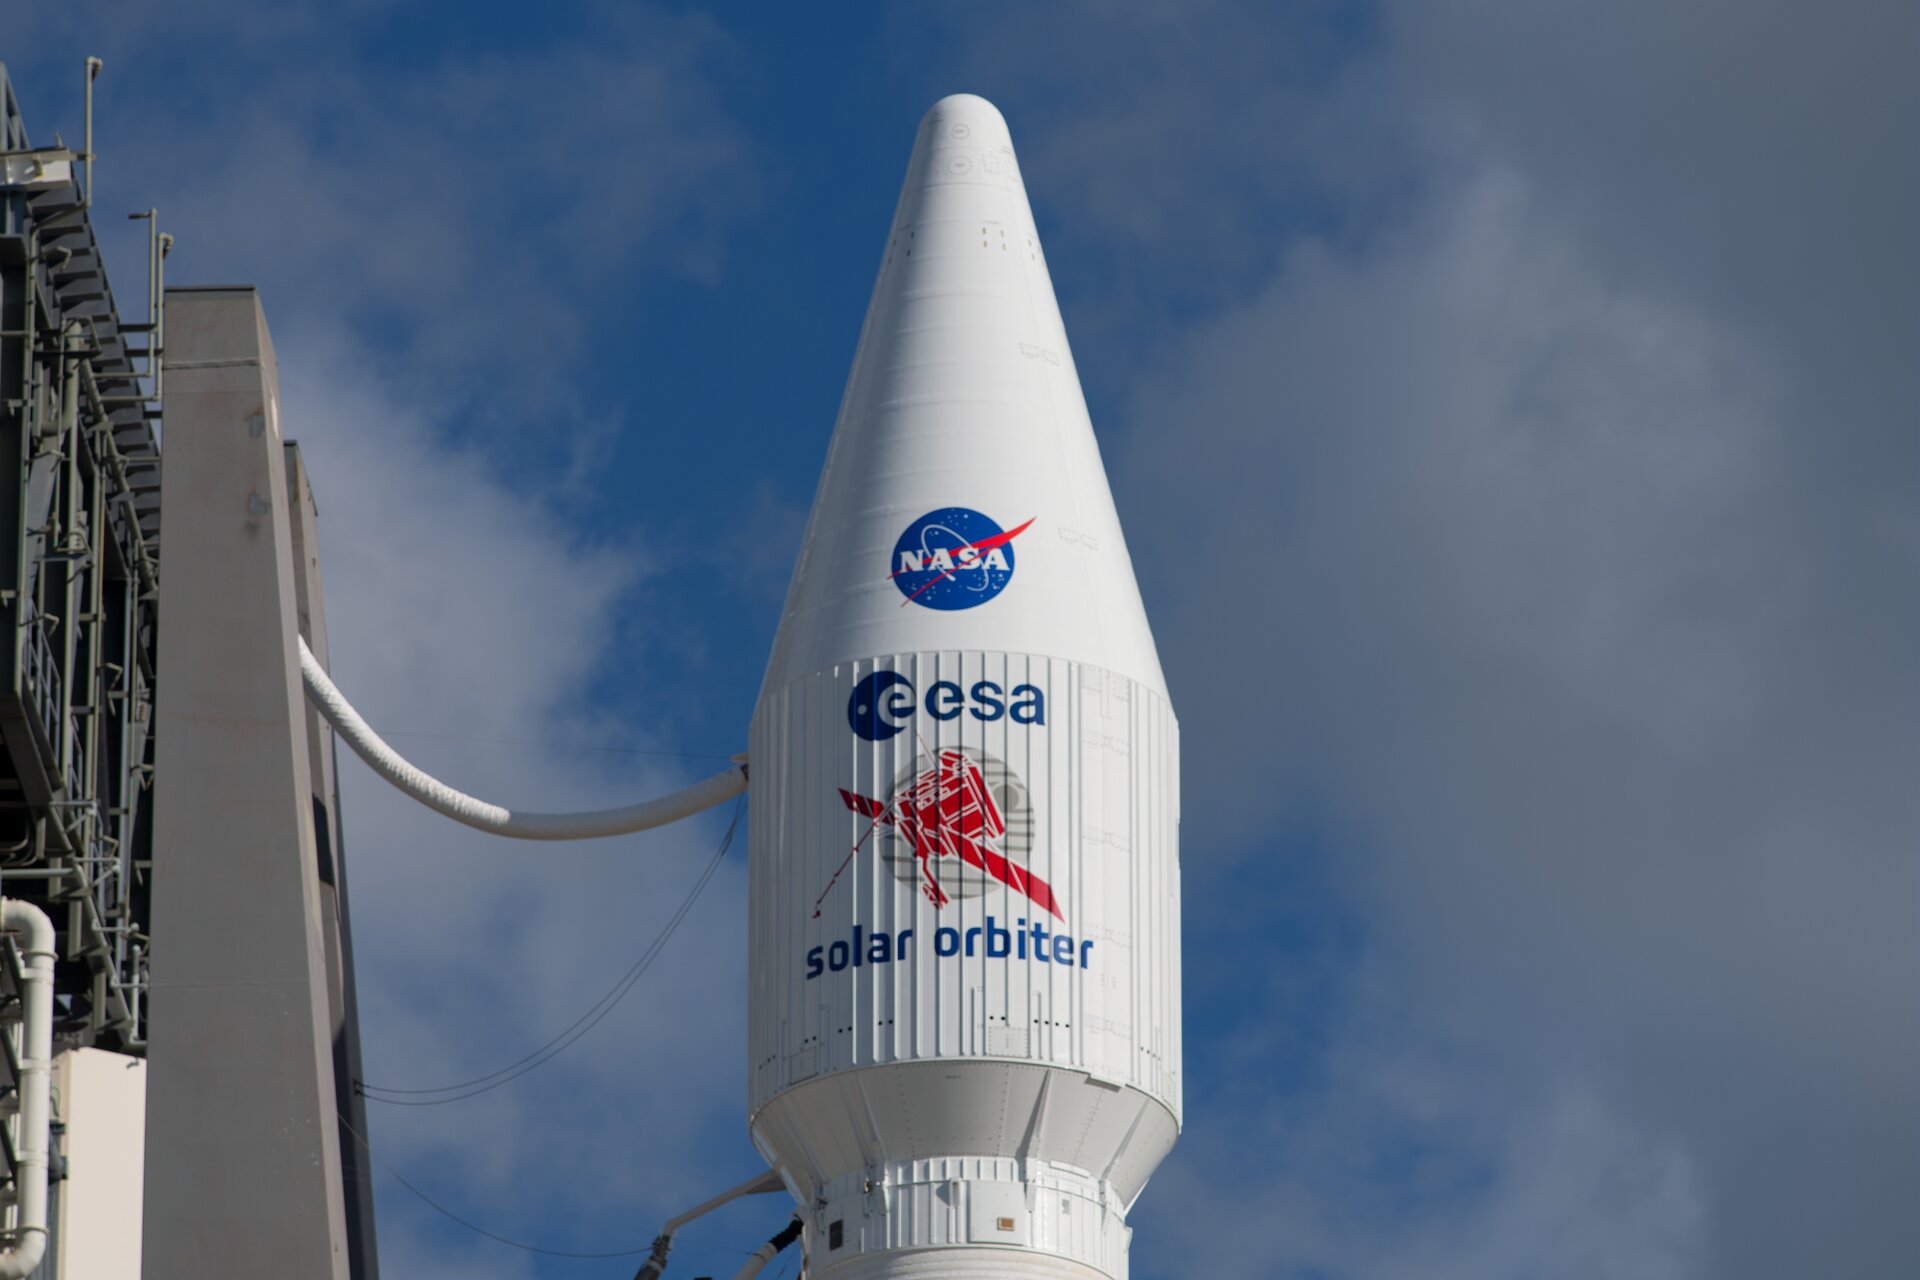 Solar Orbiter at the launch pad